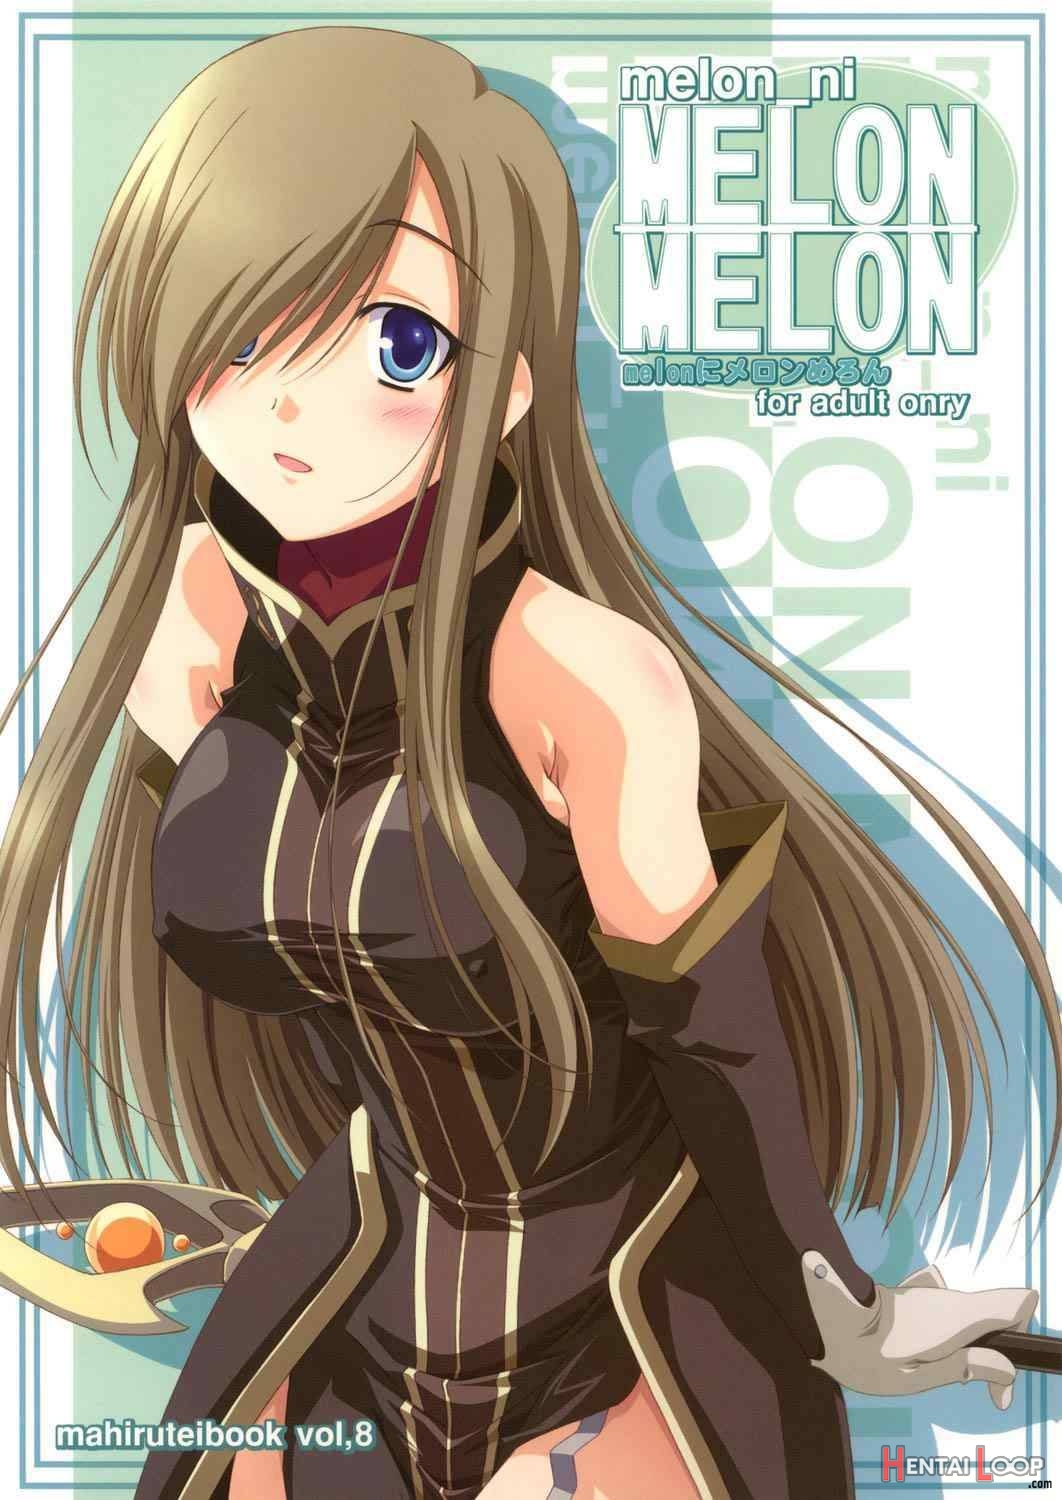 melon ni melon melon page 1